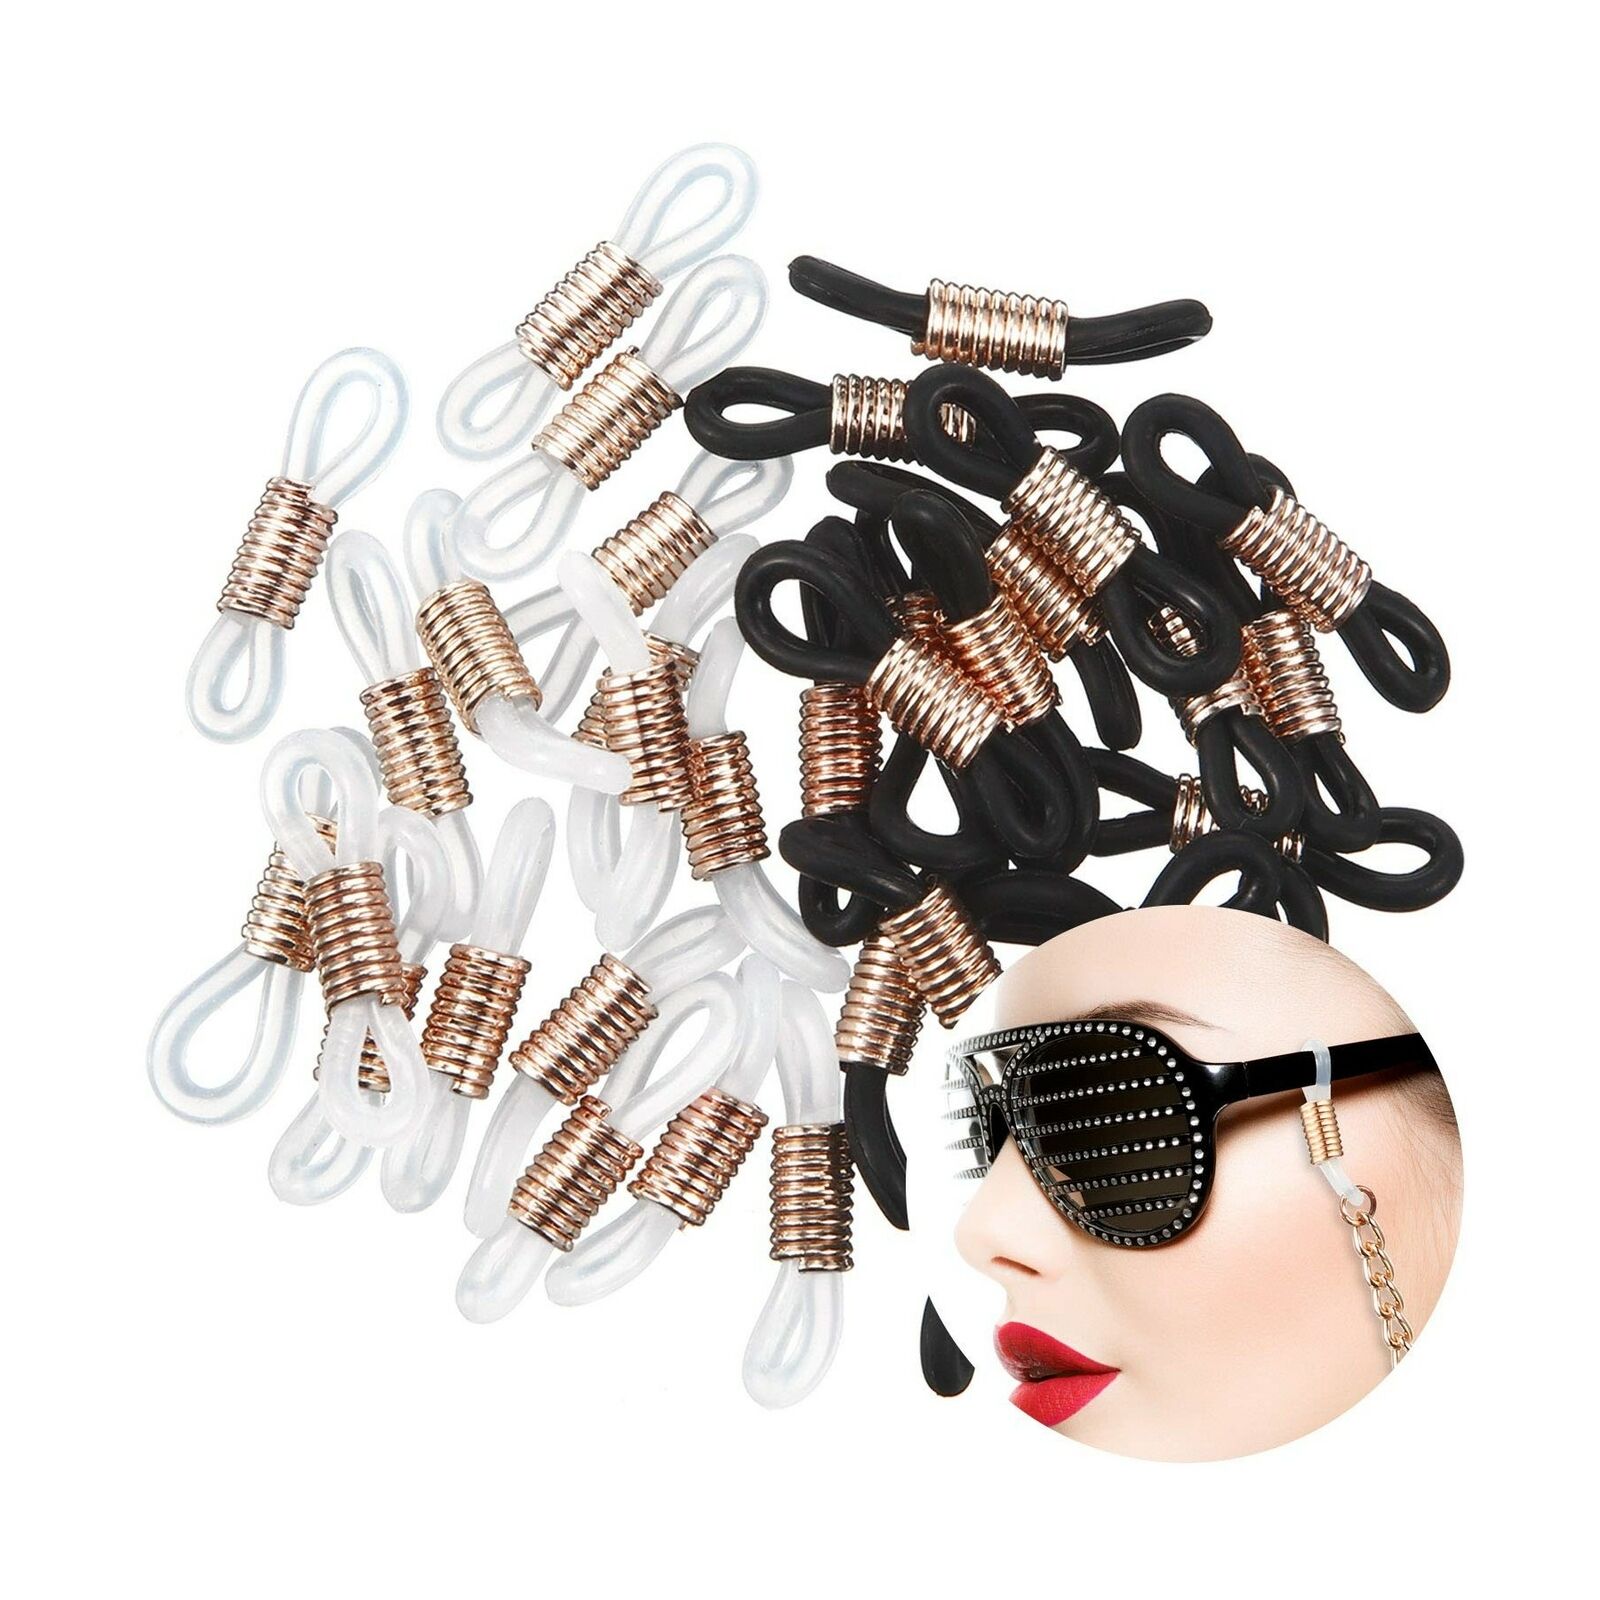 40 Pieces Eyeglass Chain Ends Adjustable Long Spring Silicone En